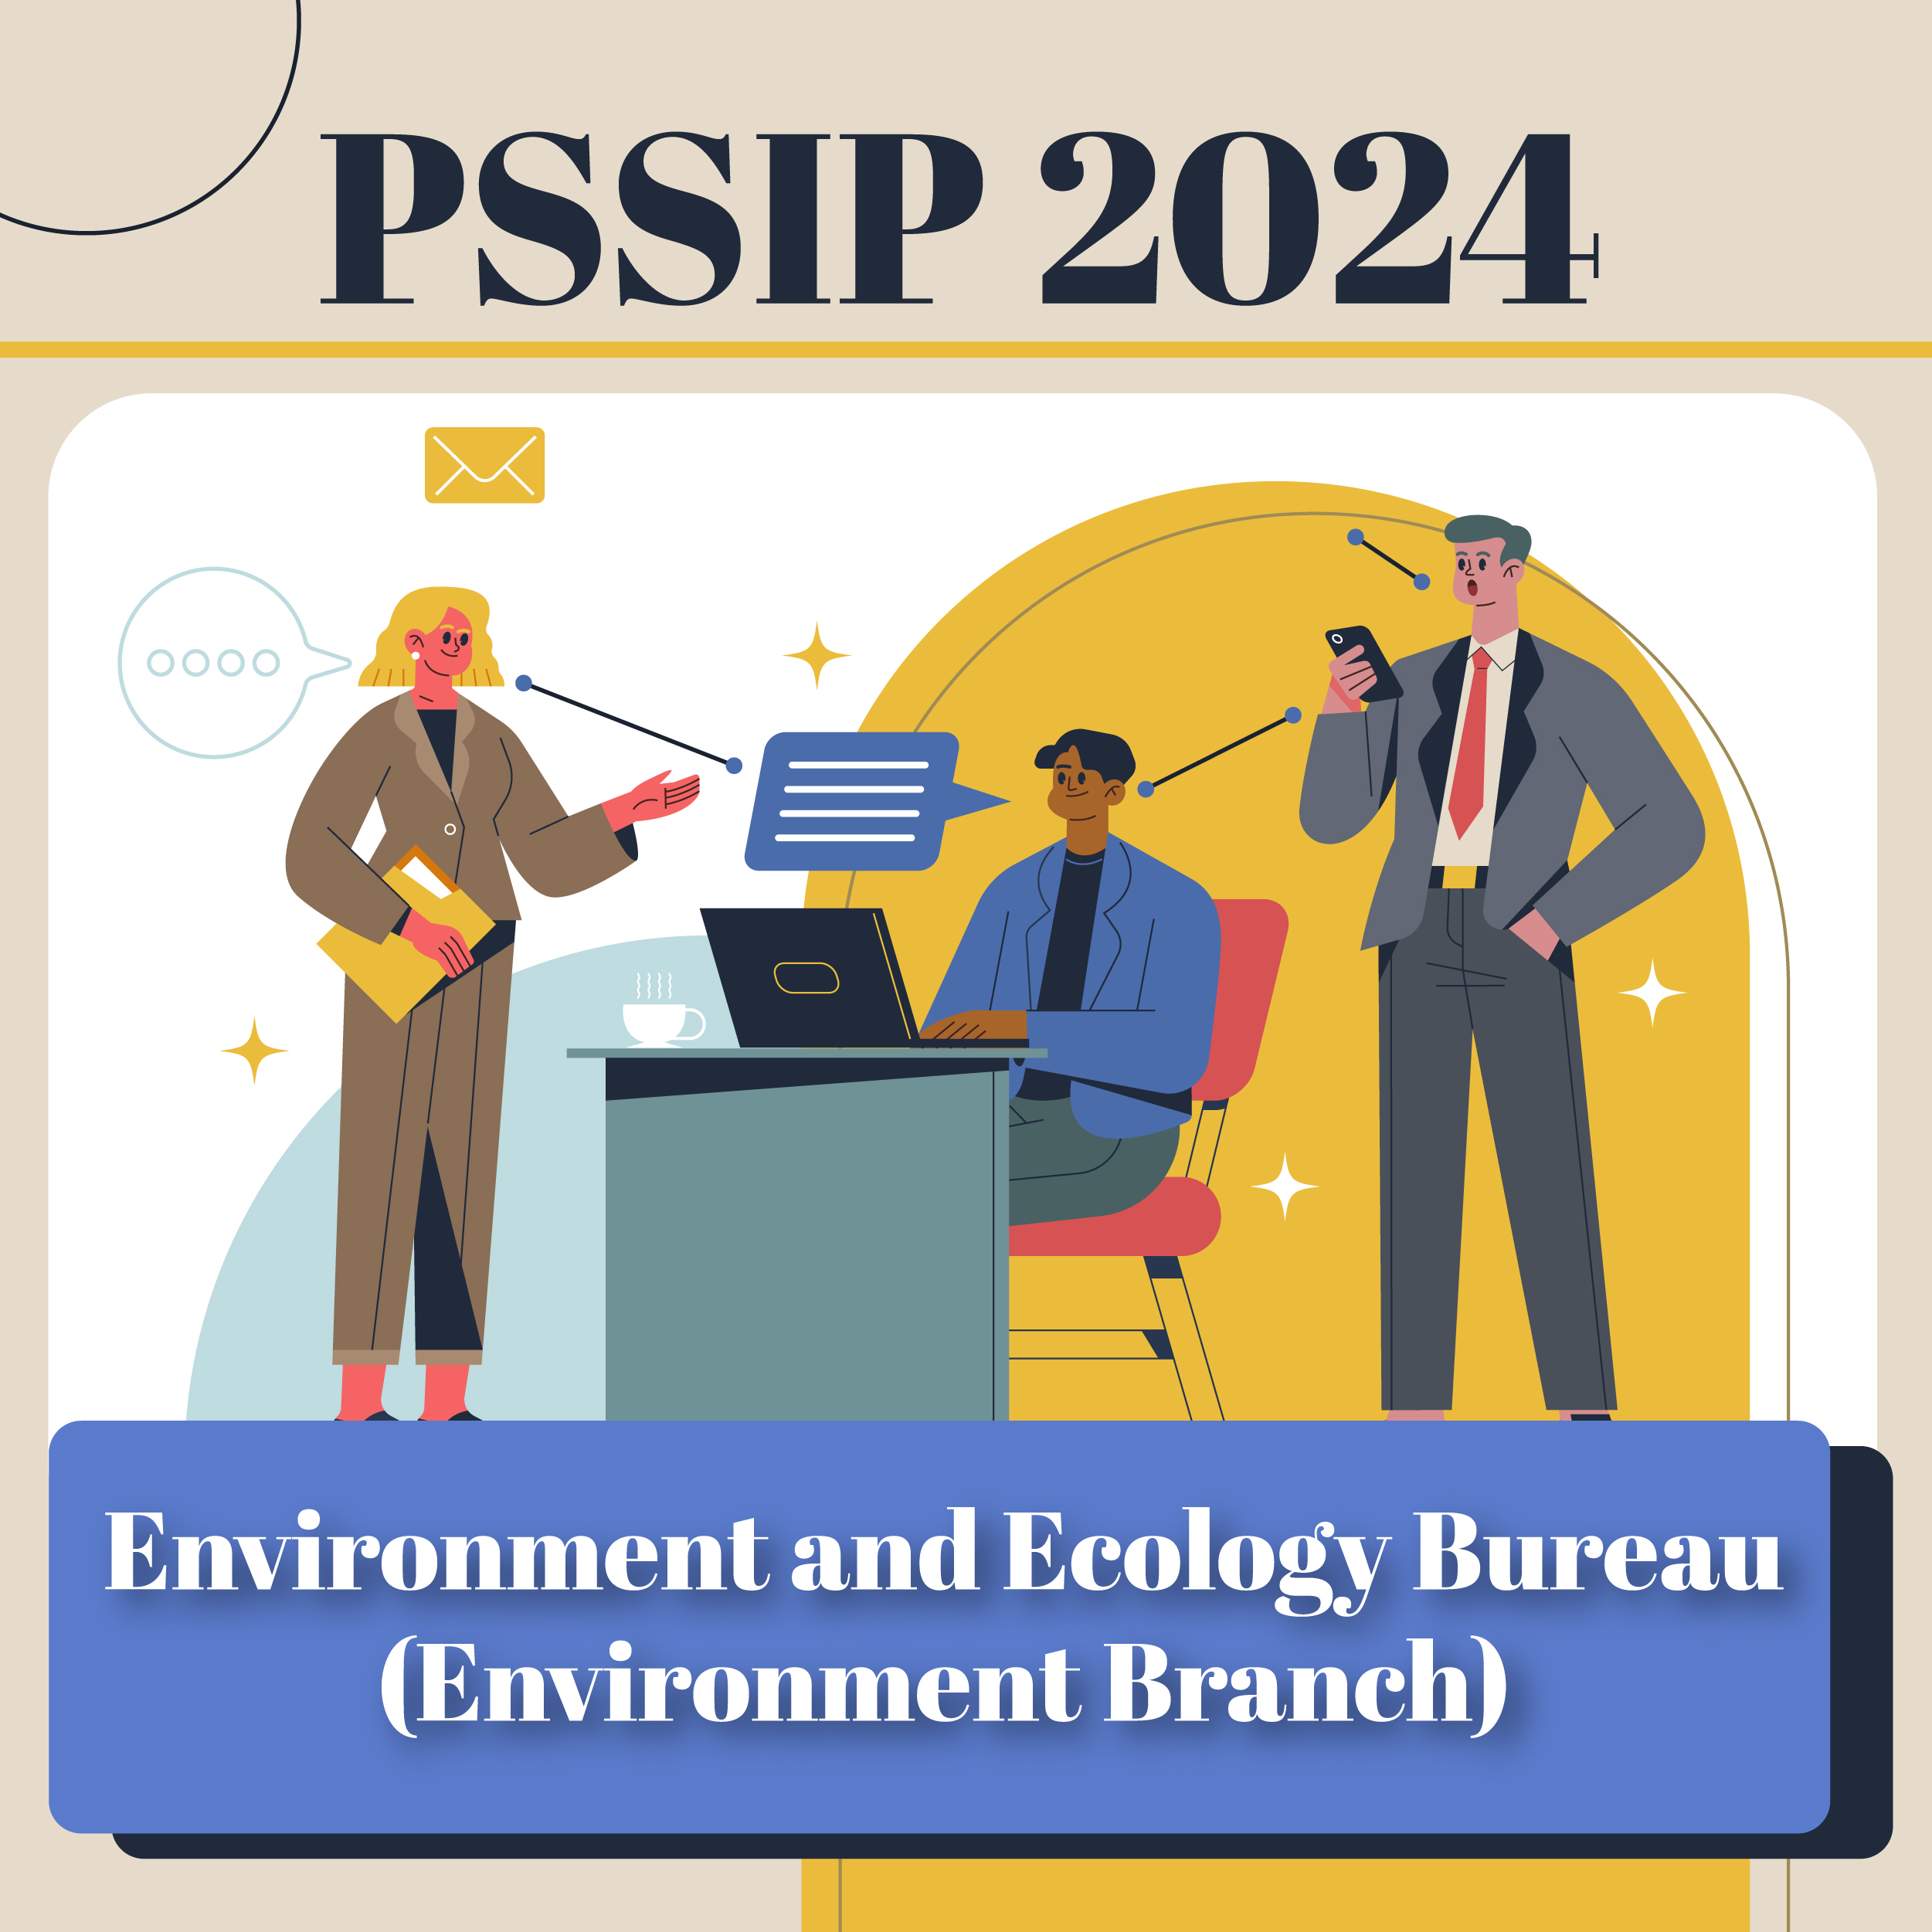 PSSIP2024 – Environment and Ecology Bureau (Environment Branch)